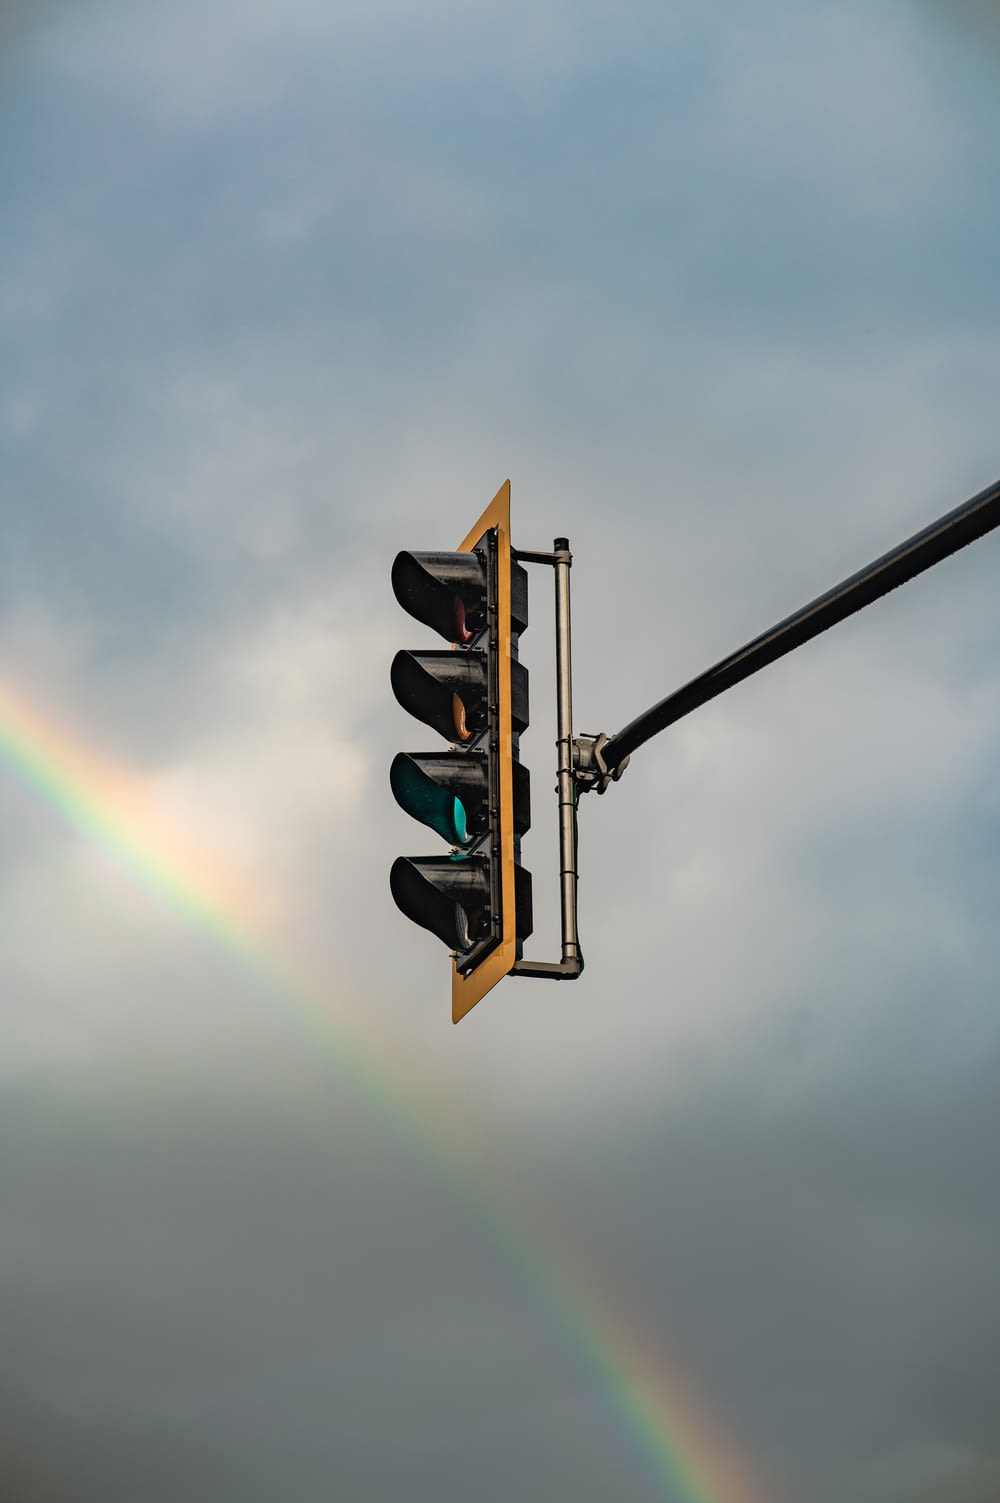 a rainbow over a traffic light